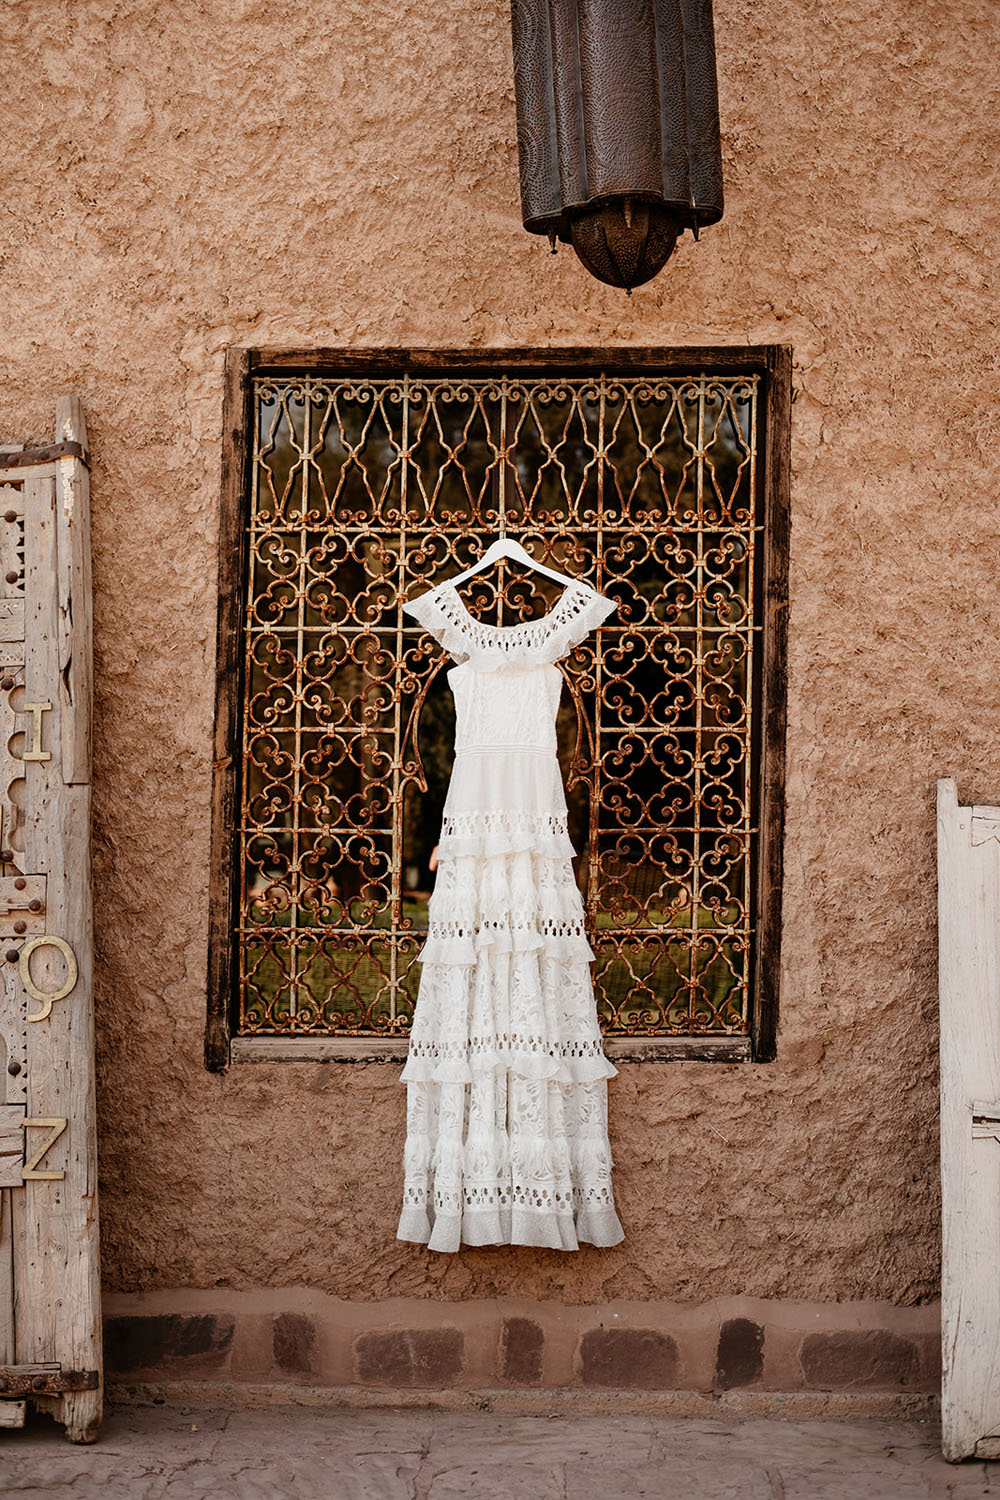 Morocco destination wedding inspiration at BELDI Country Club in Marrakech